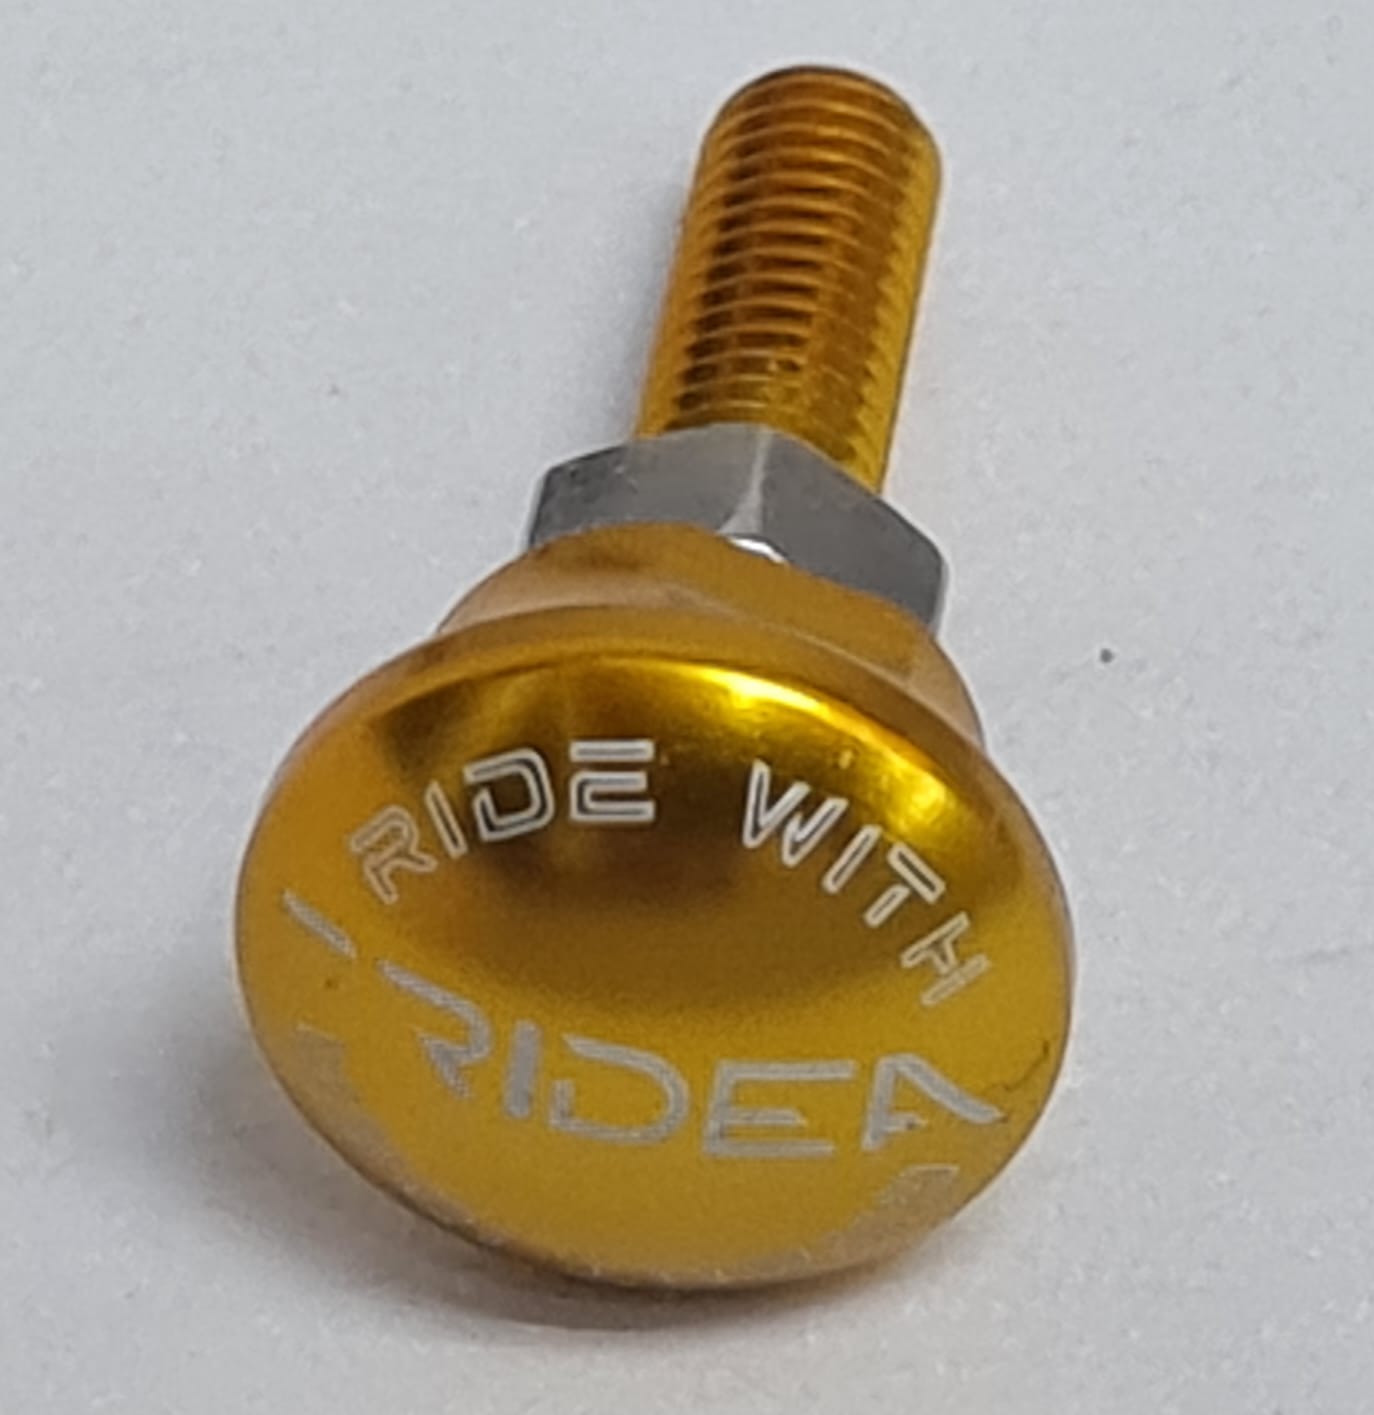 RIDEA Birdy Front Wheel Fixer Screw